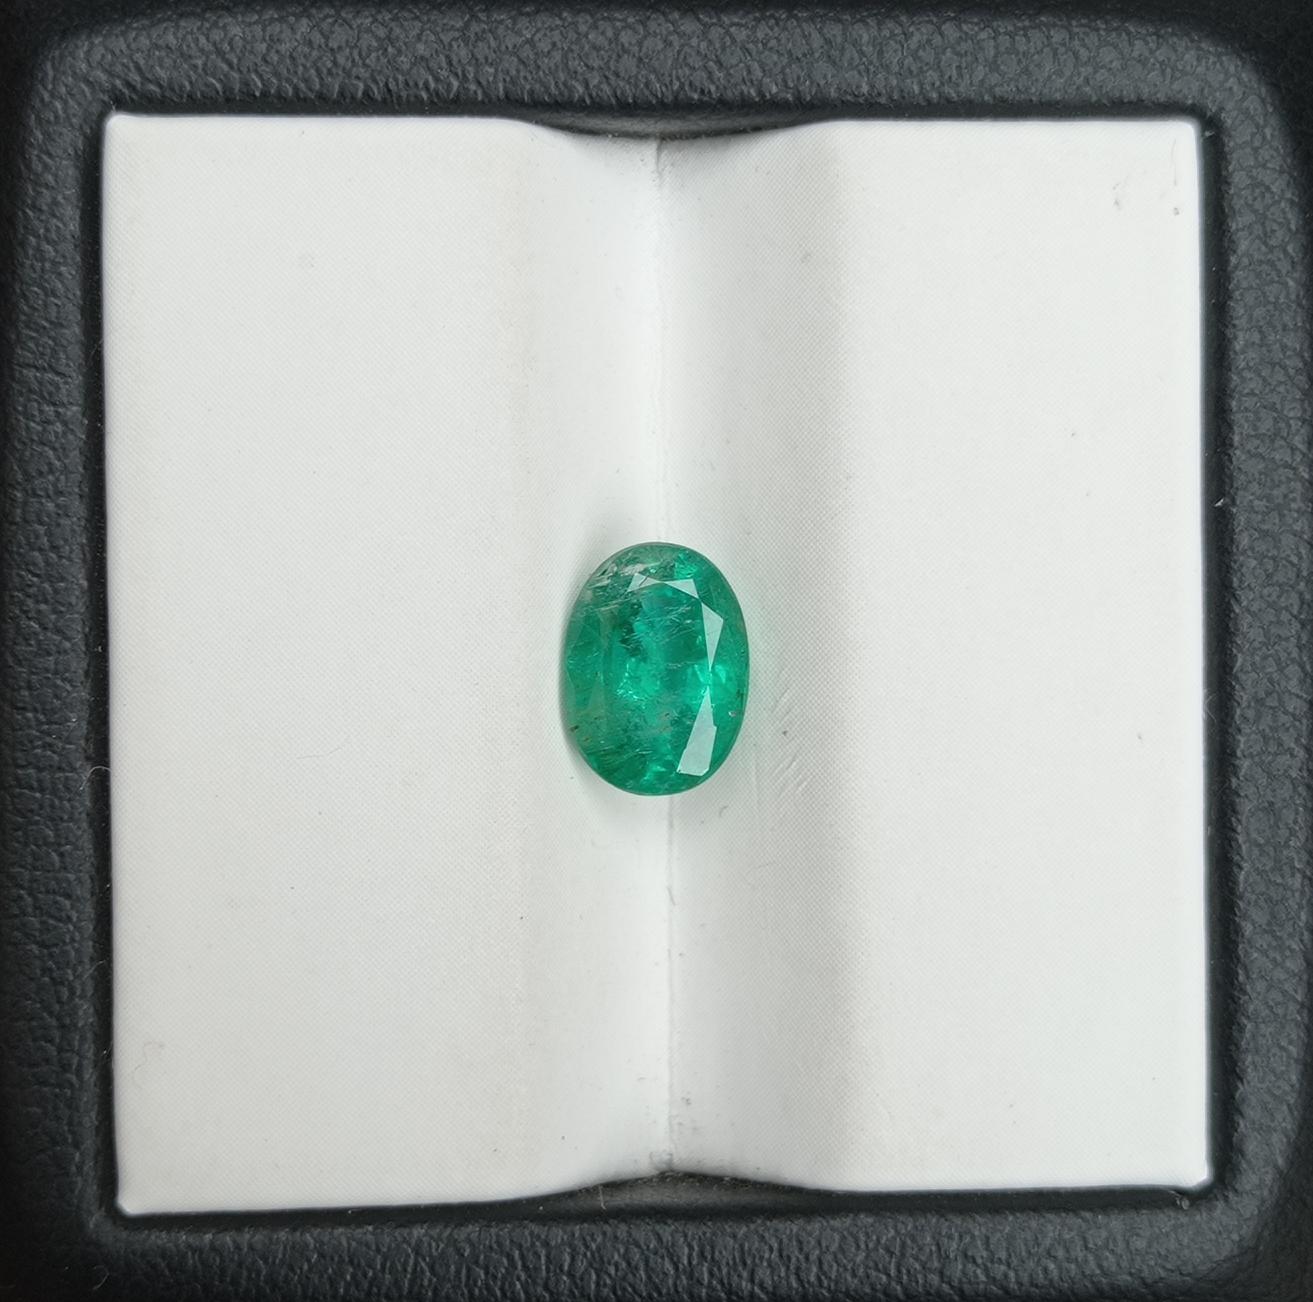 1.45ct Emerald for sale - Budh Ratna - Zamurd - Pachu Stone, Markat Mani Stone - 8x6x5mm